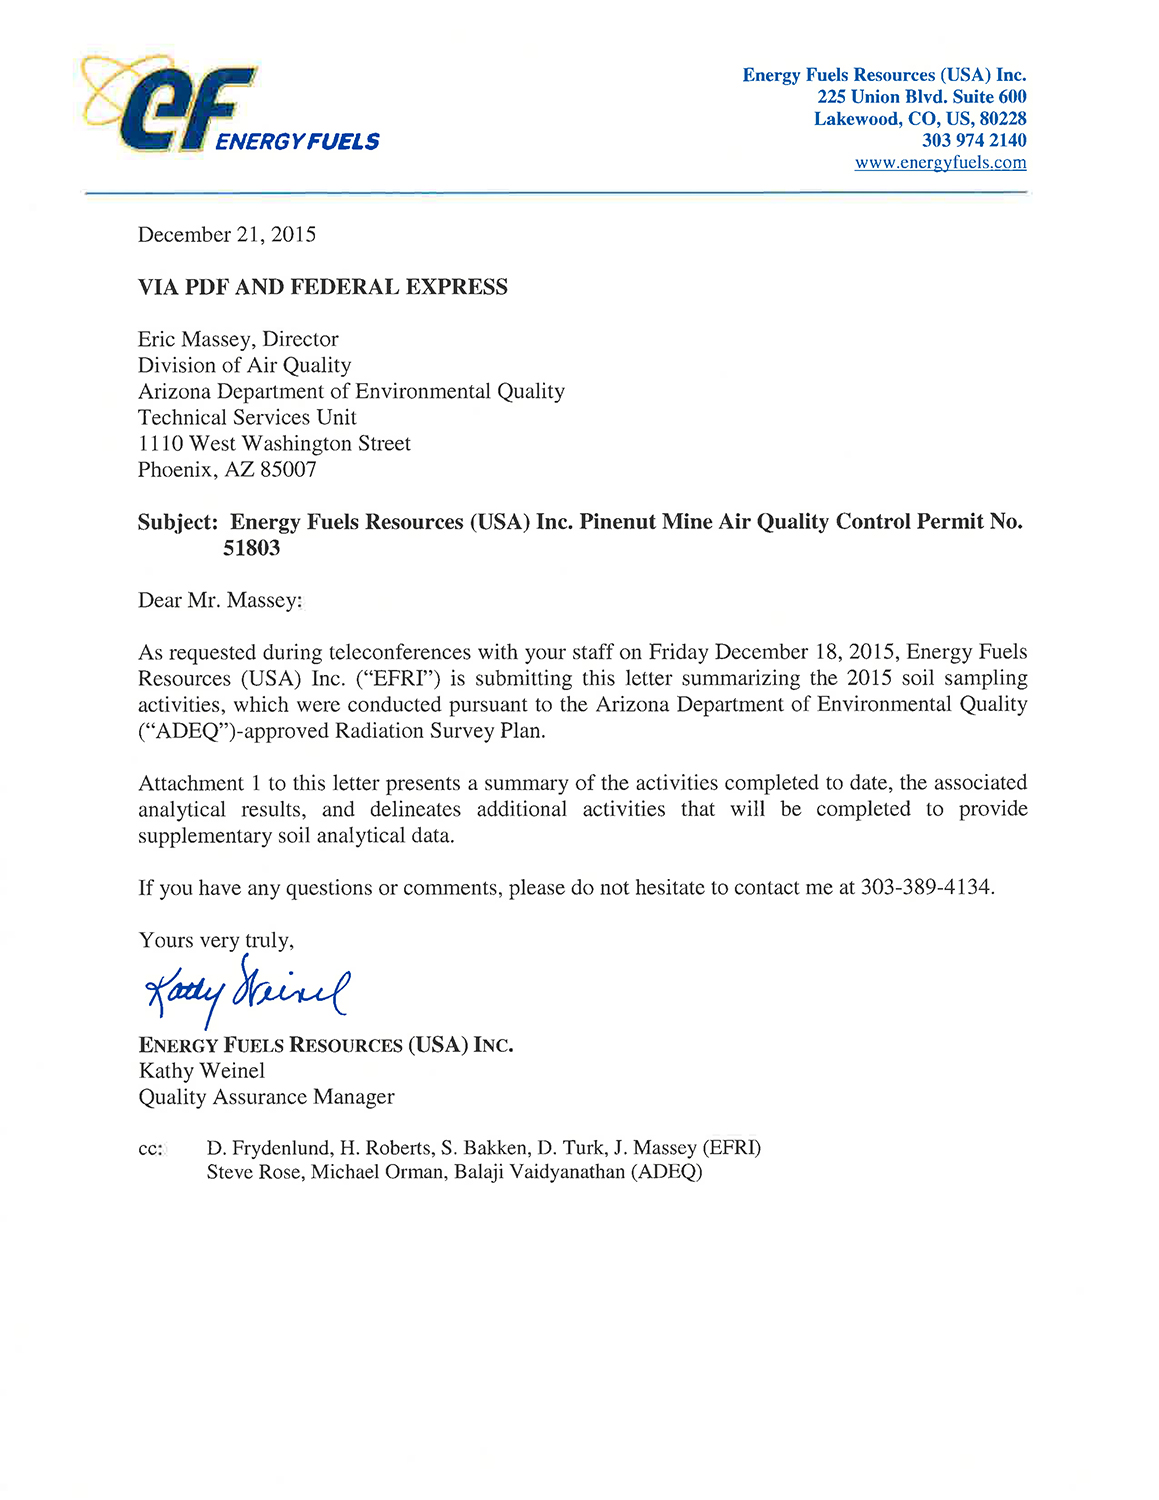 Pinenut Mine air quality permit letter